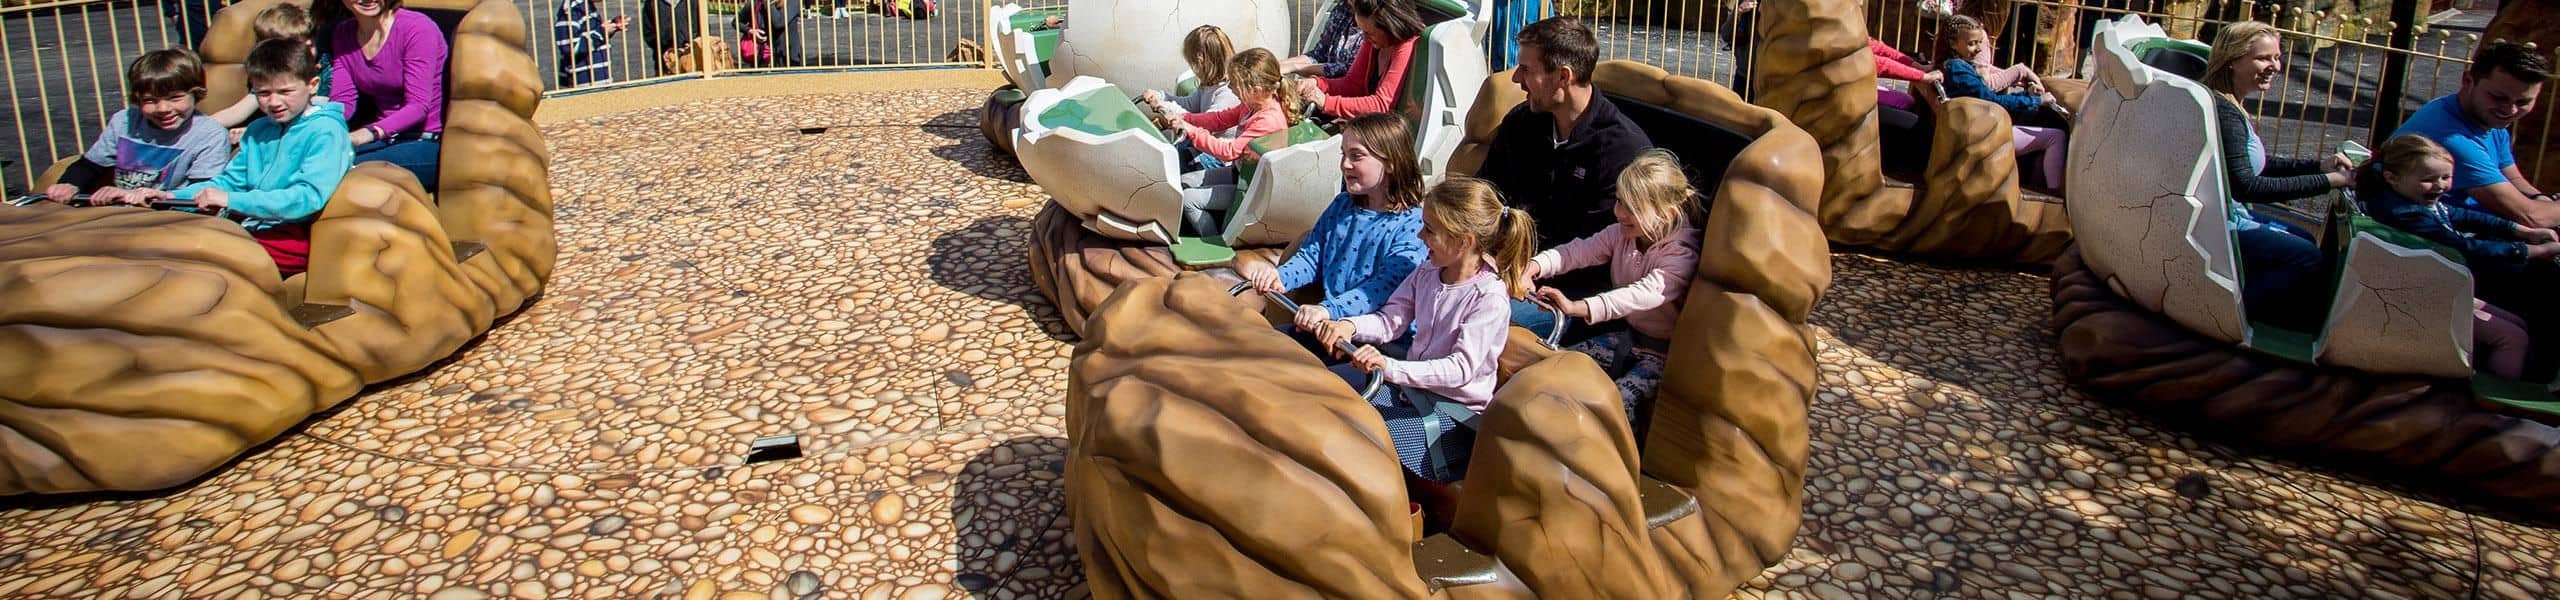 Boulder Dash and Dinosaur Eggs Ride | Paultons Park